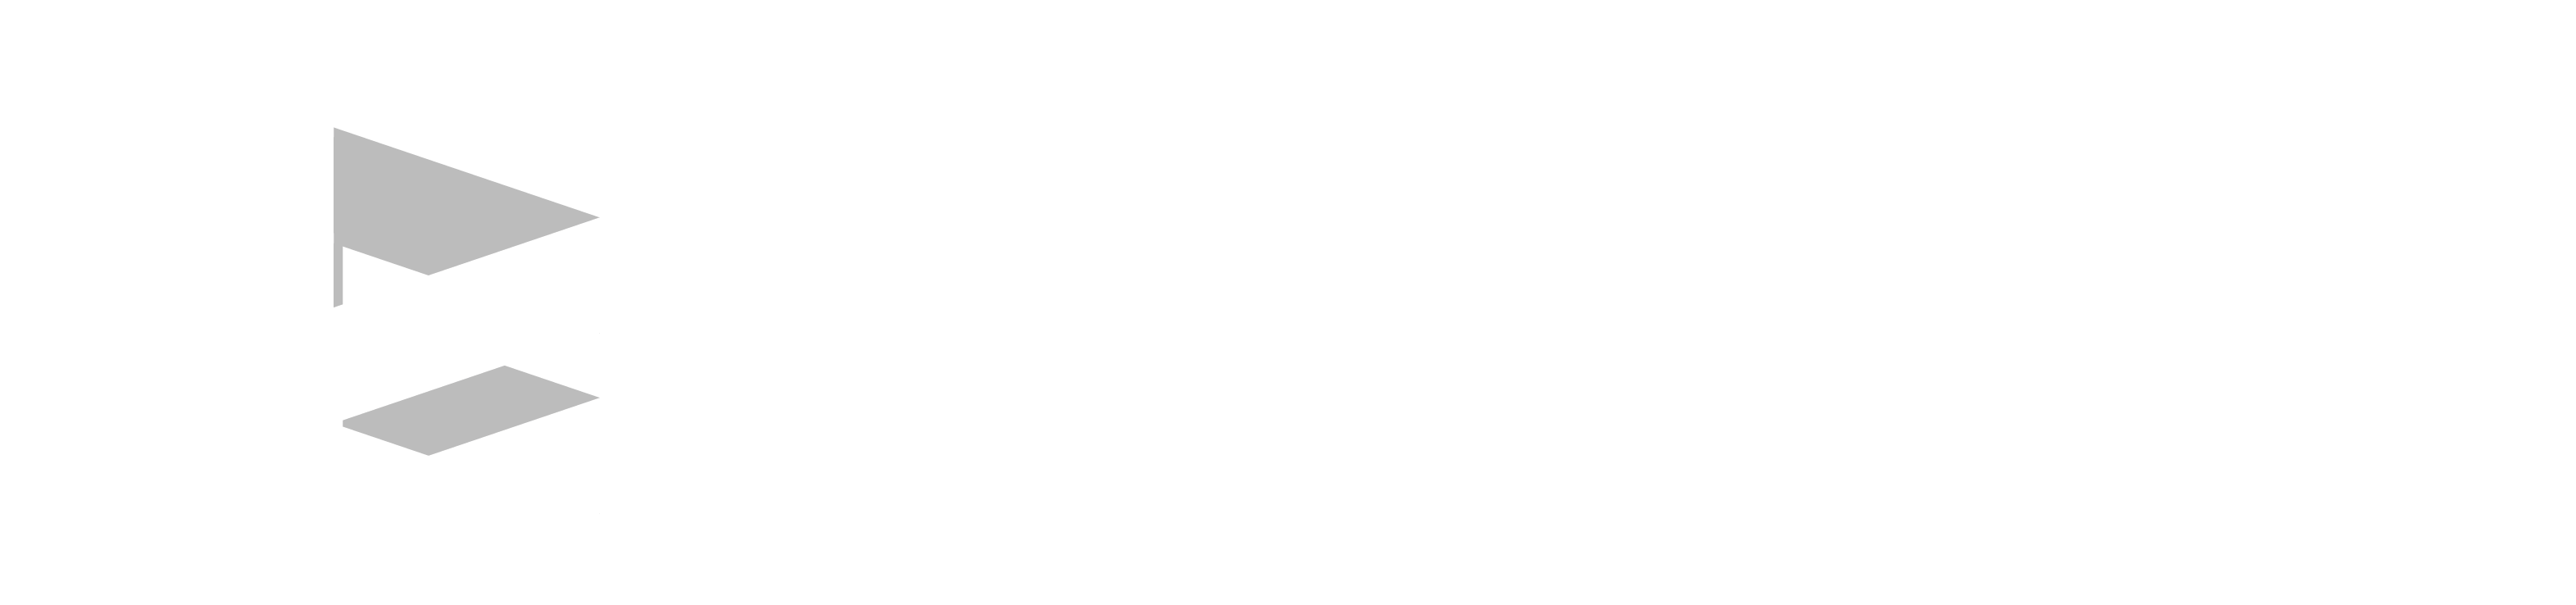 Bryner Design